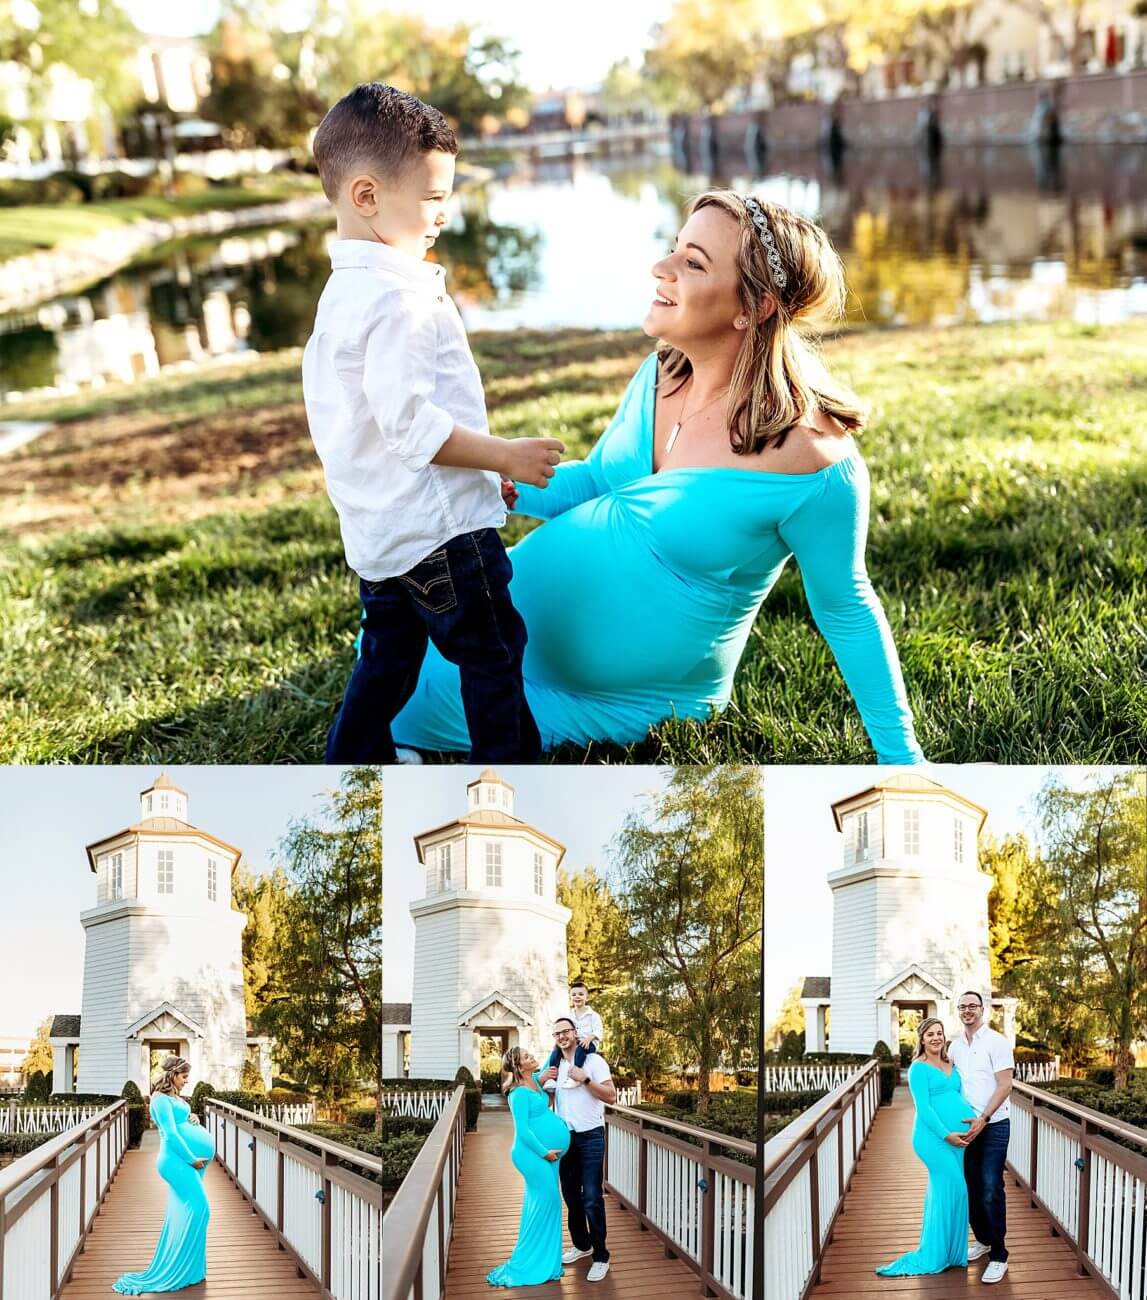 Twin maternity session! Glendale, AZ Maternity Photographer